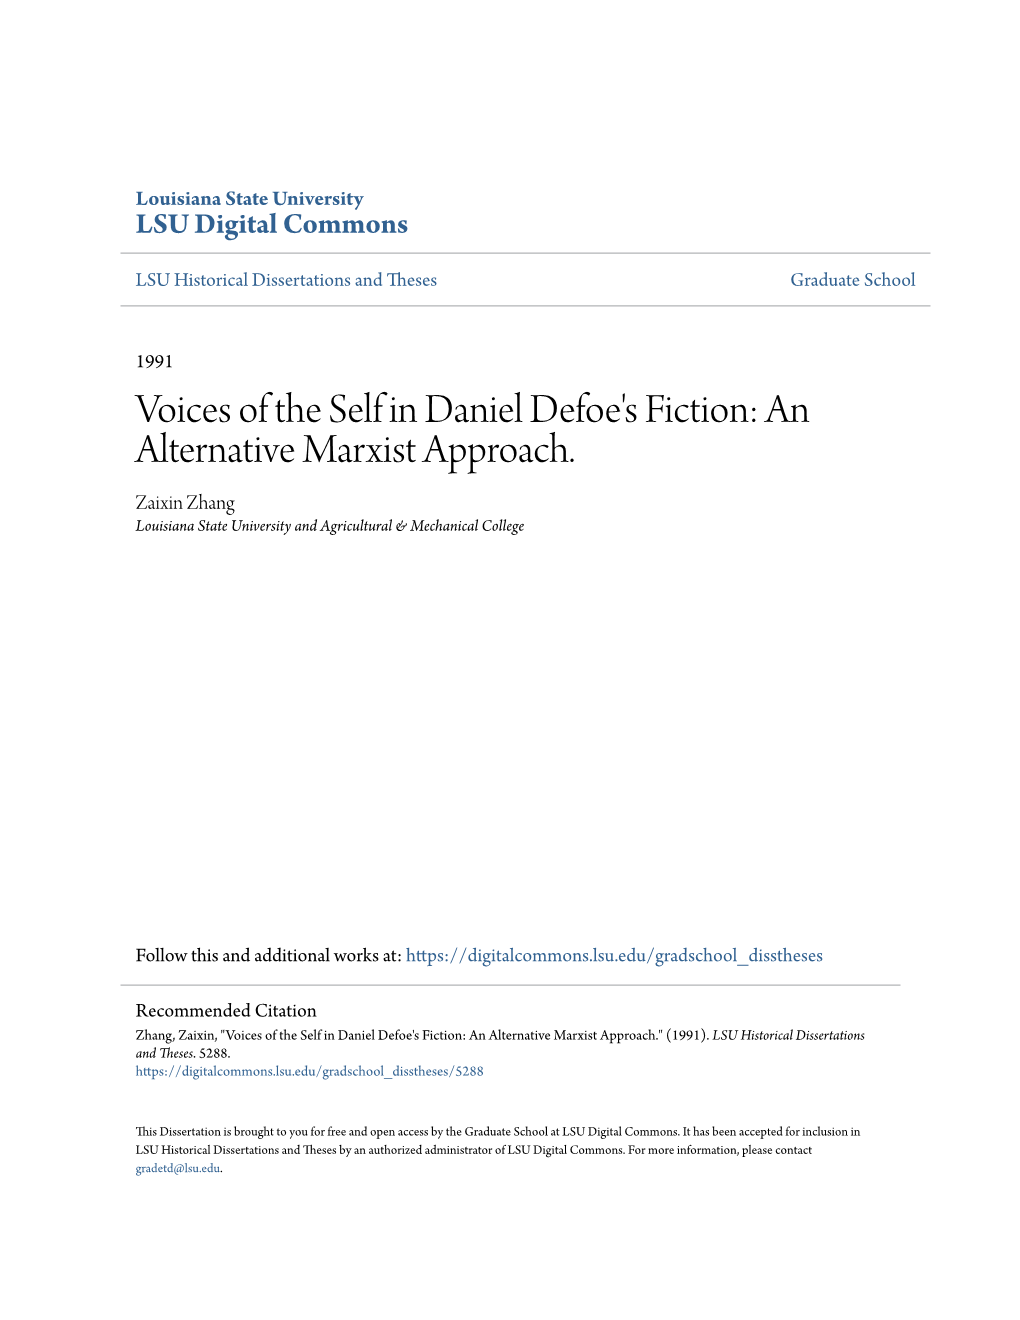 Voices of the Self in Daniel Defoe's Fiction: an Alternative Marxist Approach